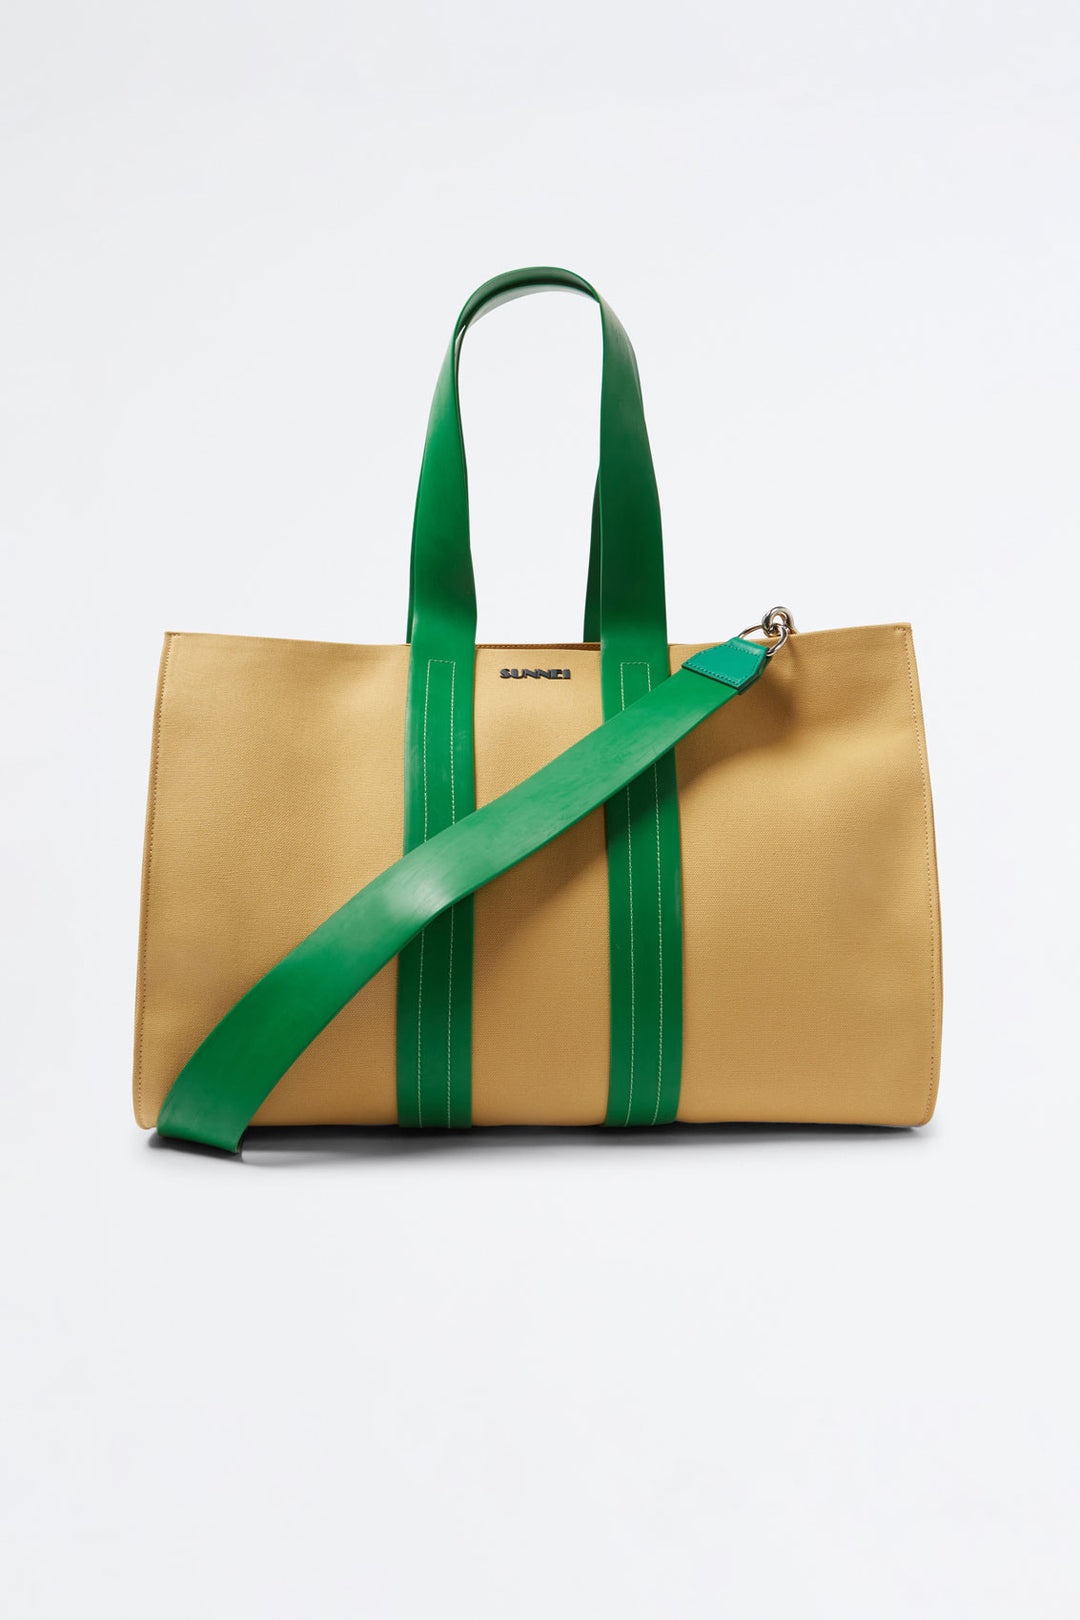 PARALLELEPIPEDO BAG / beige & green - 1